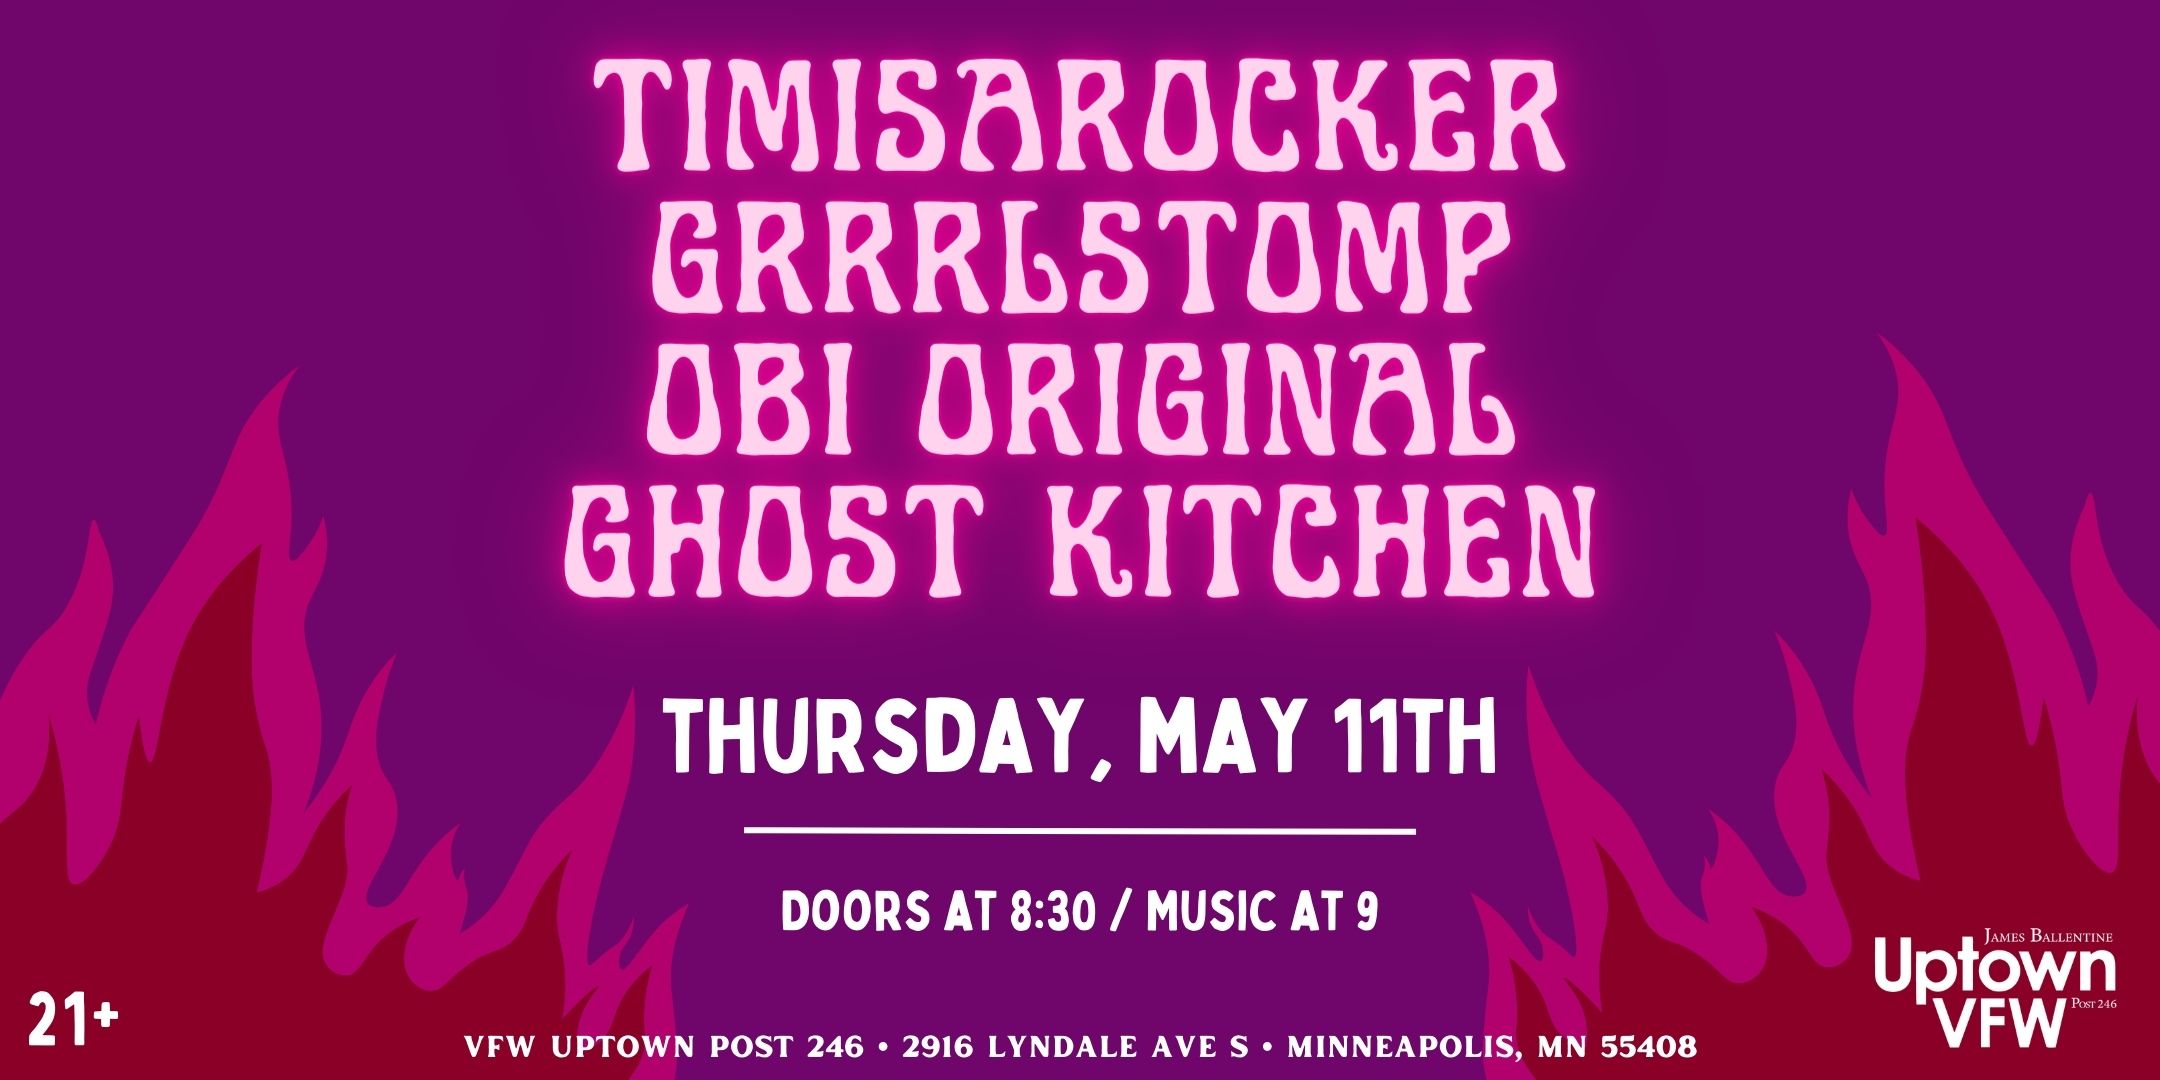 TIMISAROCKER Grrrlstomp Obi Original Ghost Kitchen Thursday, May 11 James Ballentine "Uptown" VFW Post 246 Doors 8:30pm :: Music 9:00pm :: 21+ GA $7 ADV / $12 DOS NO REFUNDS